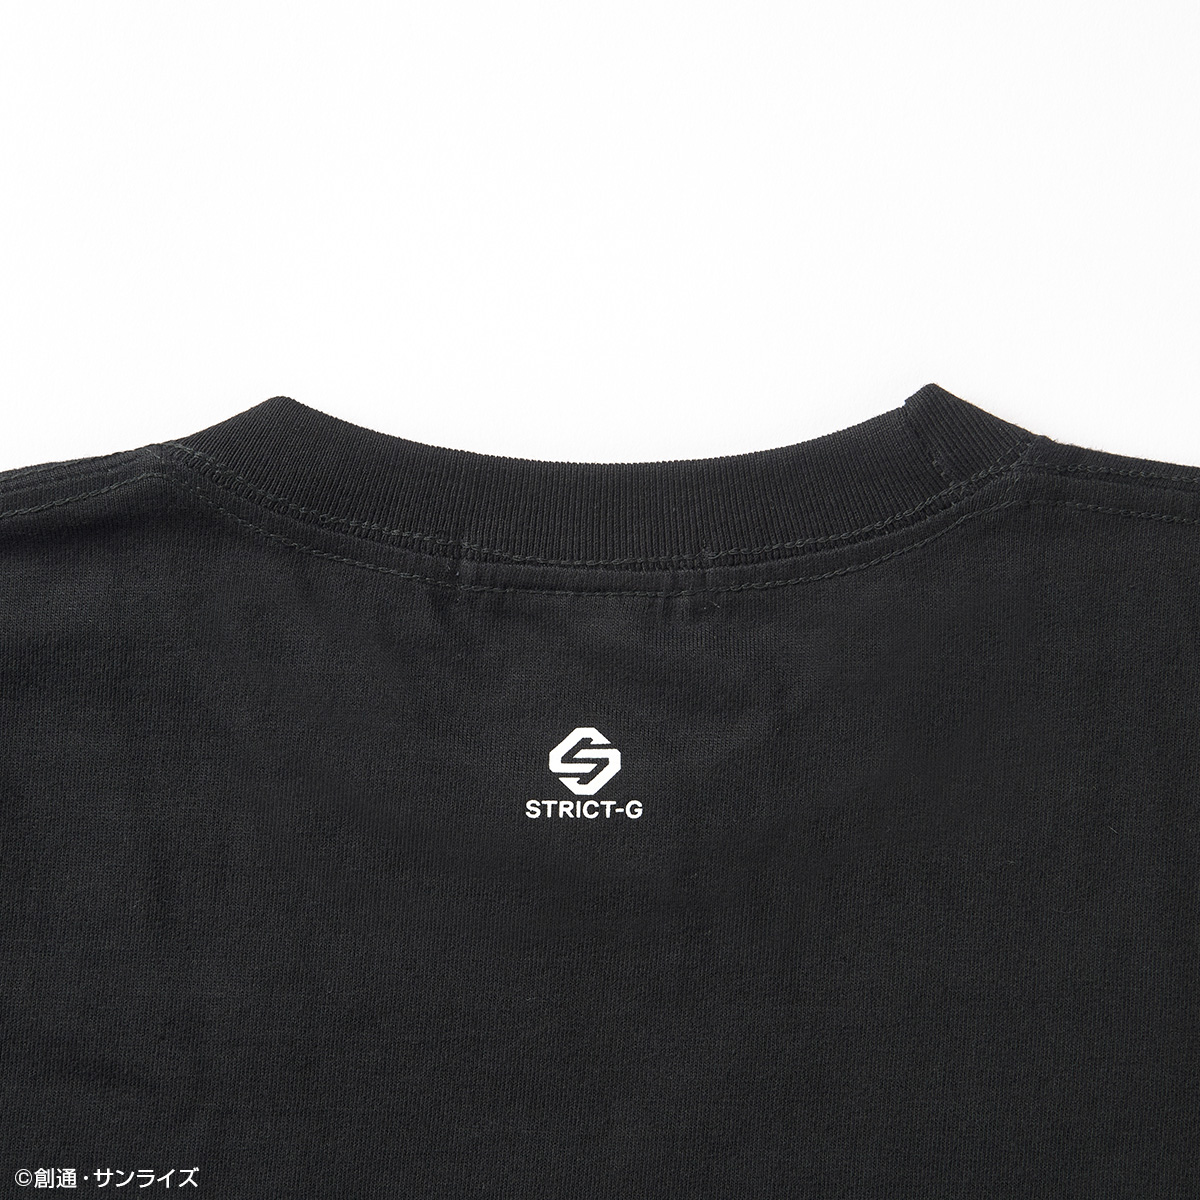 STRICT-G『機動戦士ガンダム』Tシャツコレクション CHAR AZNABLE 002